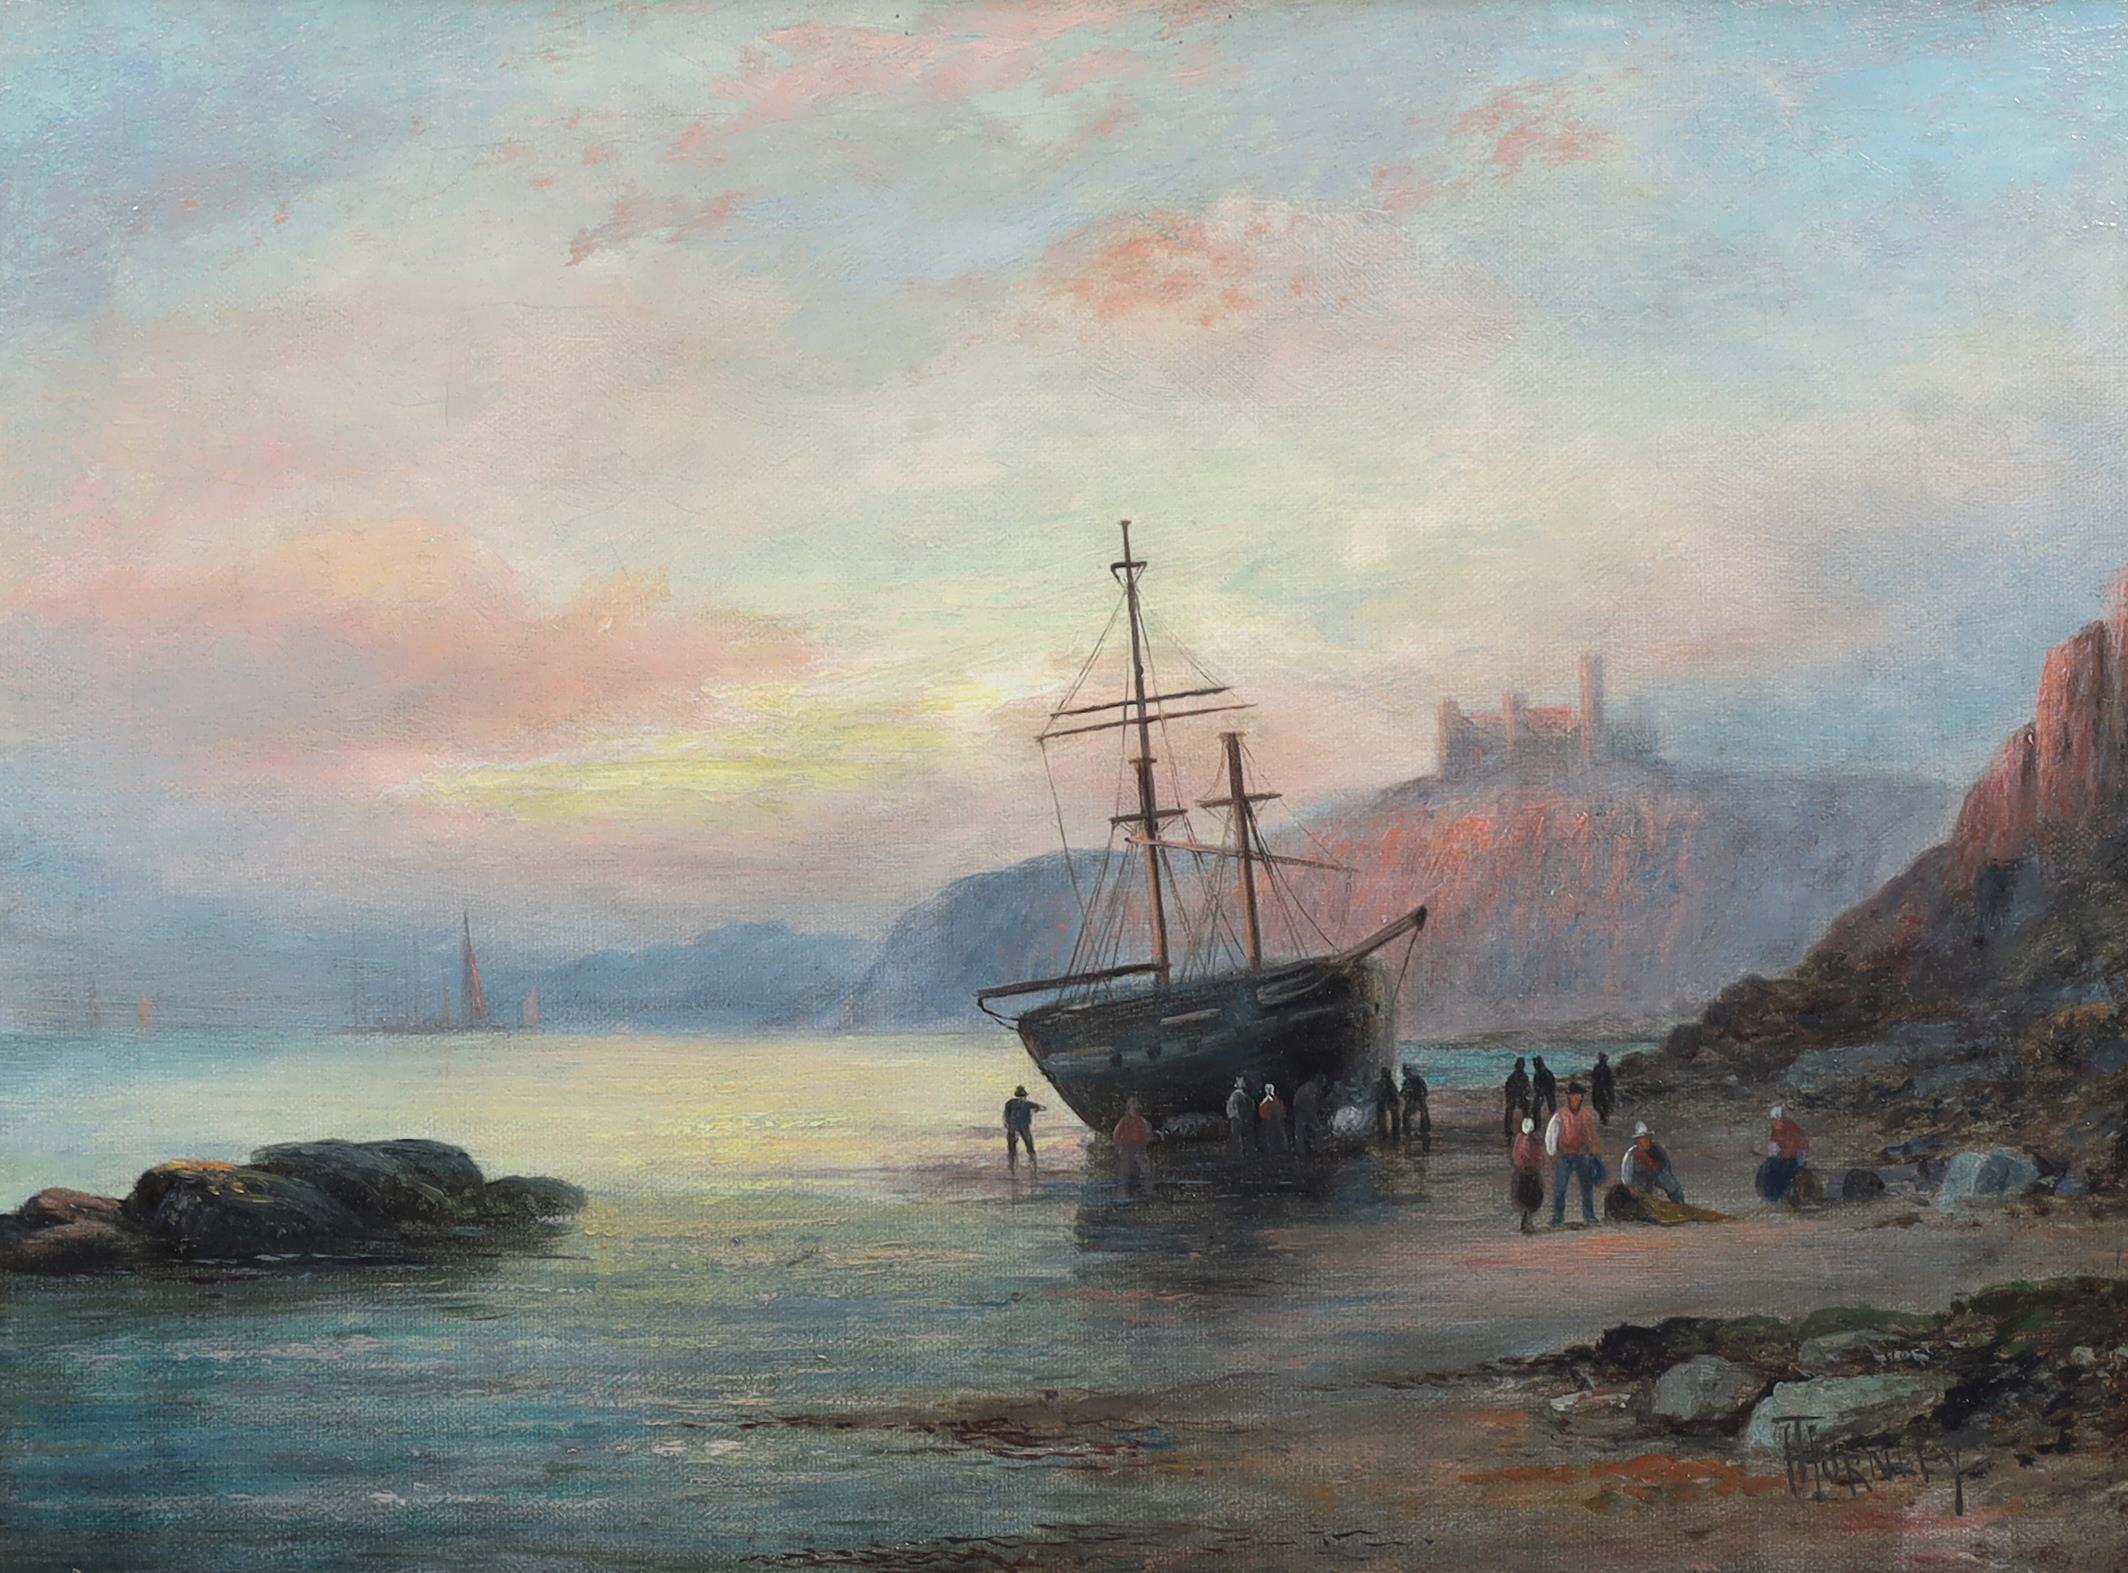 Hubert Thornley (William Anslow Thornley) (fl.1859-1898) Beached ship on the shore near Whitbyoil on